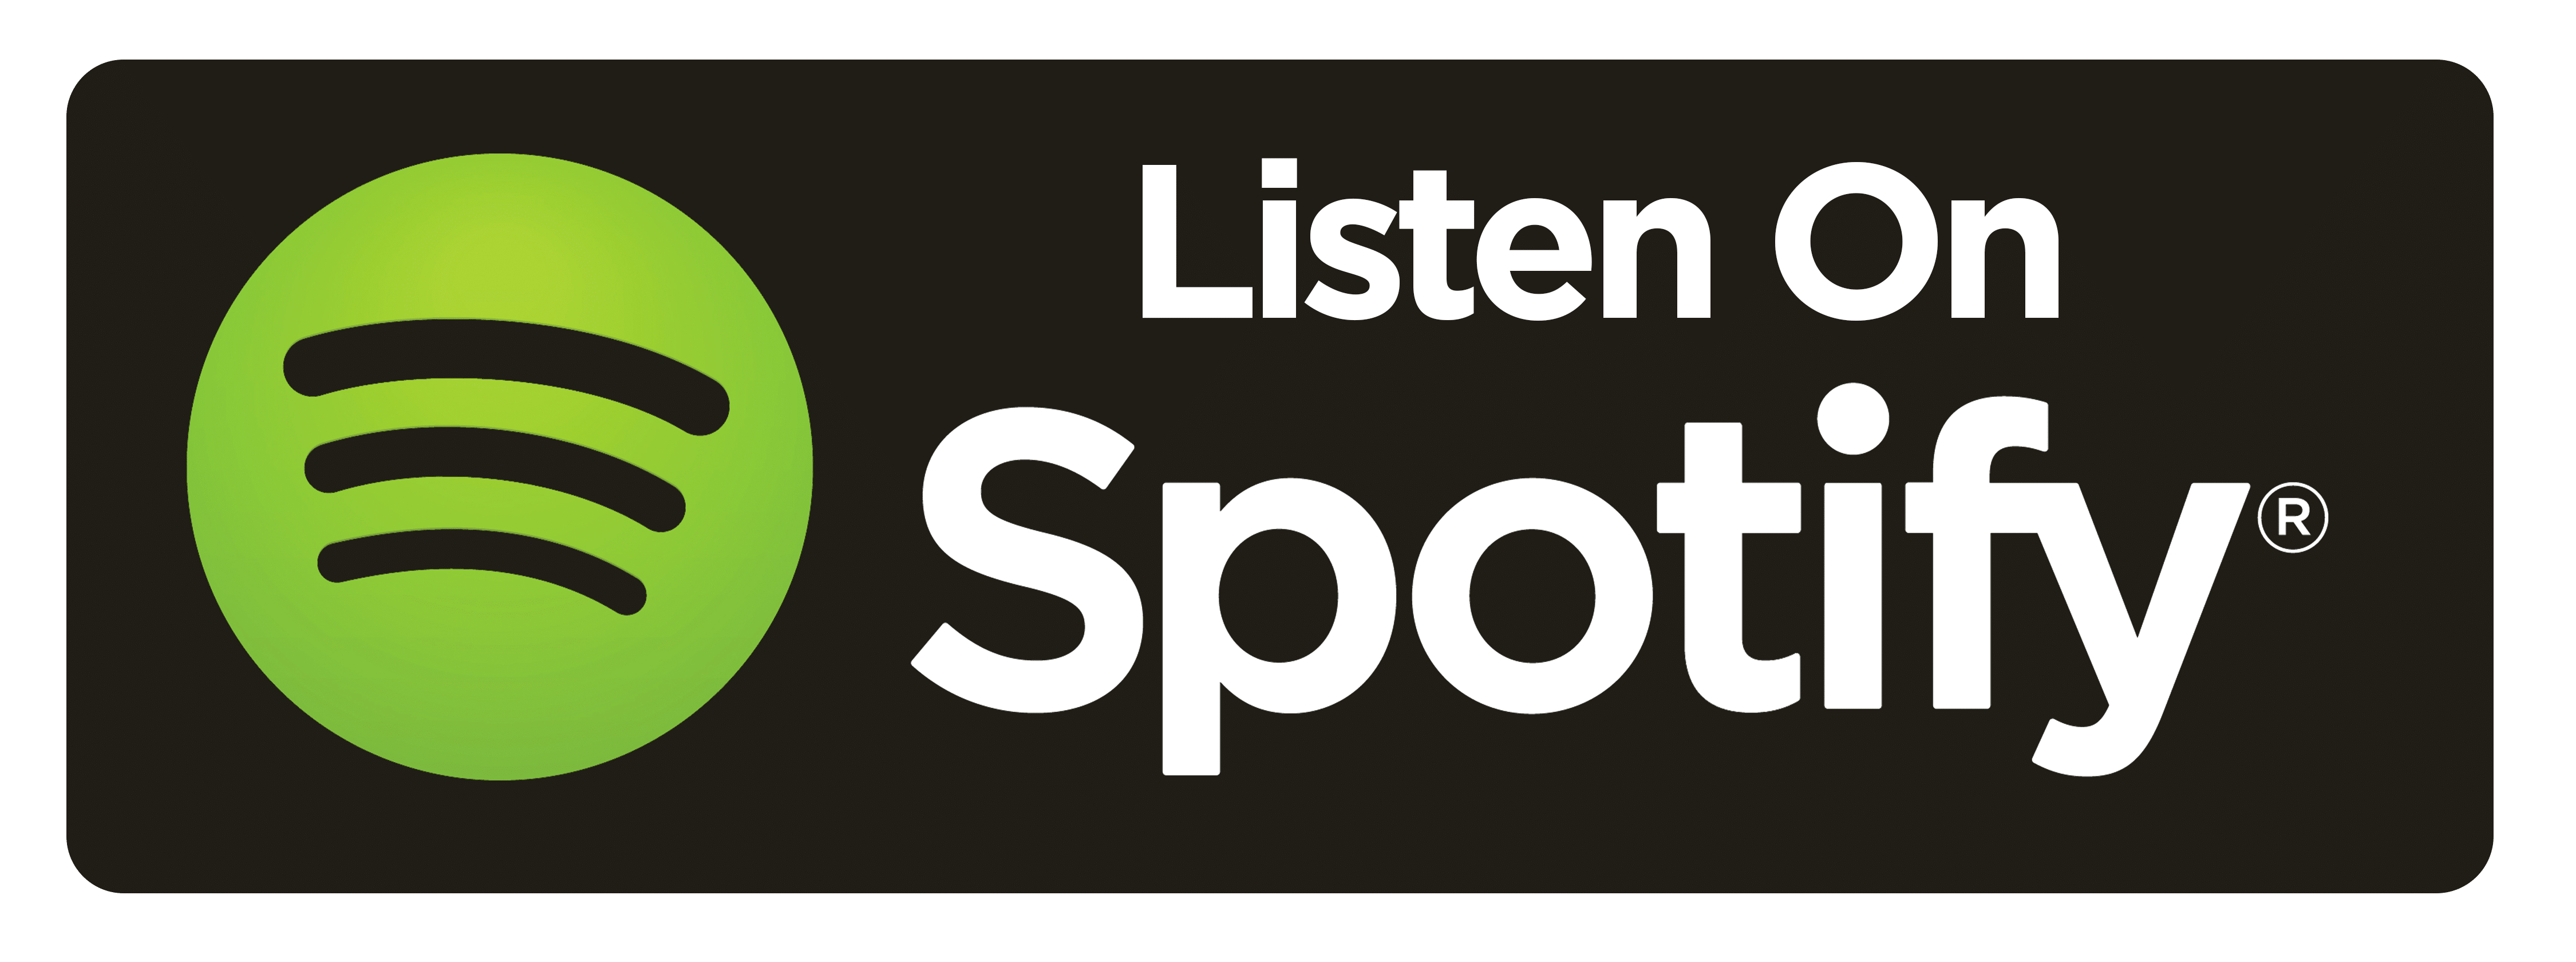 Spotify Logo PNG Transparent Spotify Logo.PNG Images. | PlusPNG